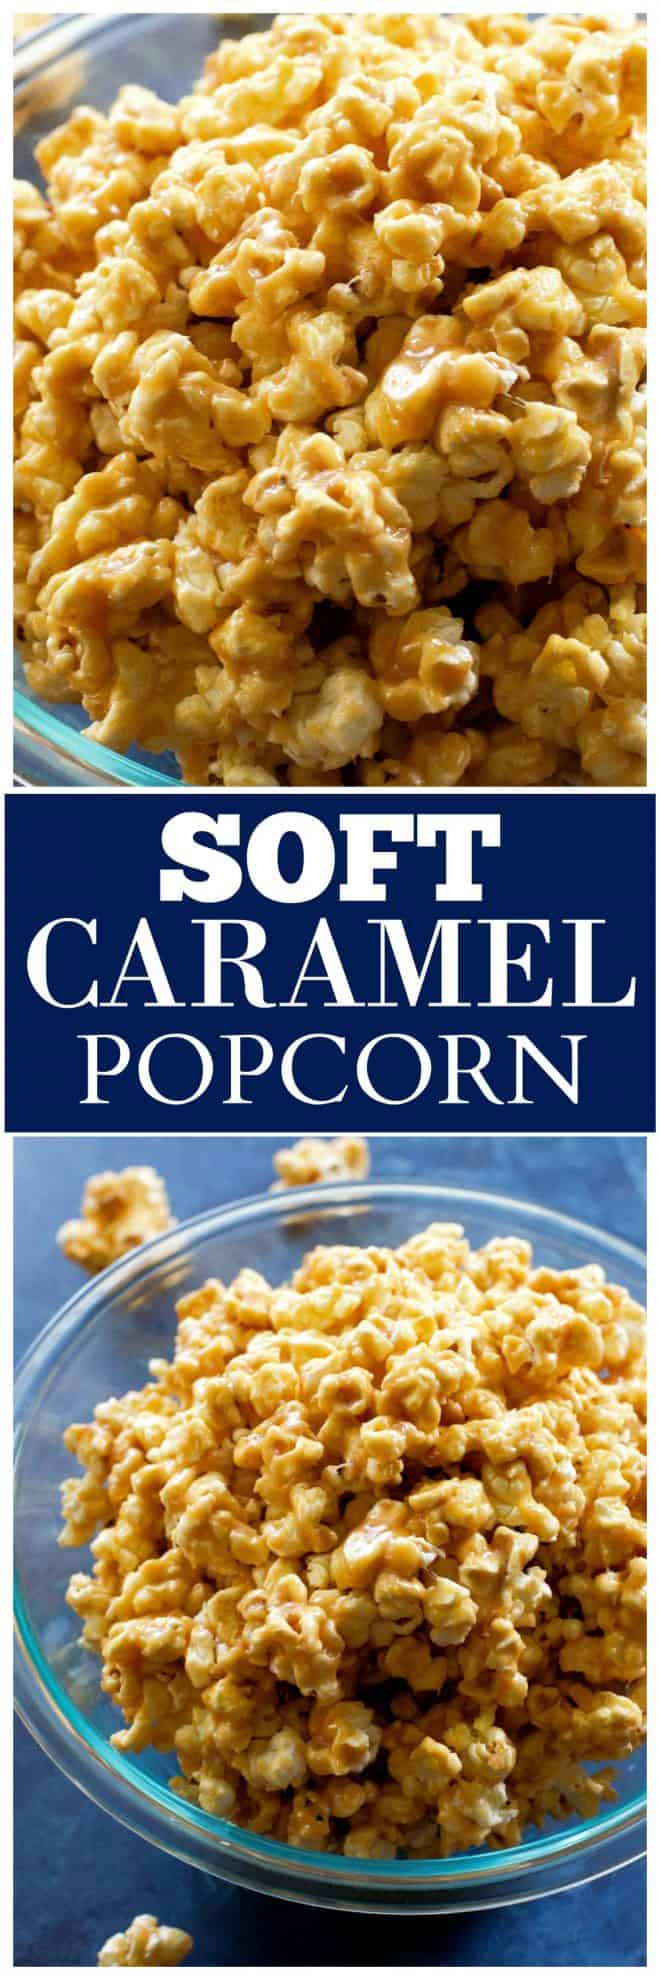 Soft Caramel Popcorn